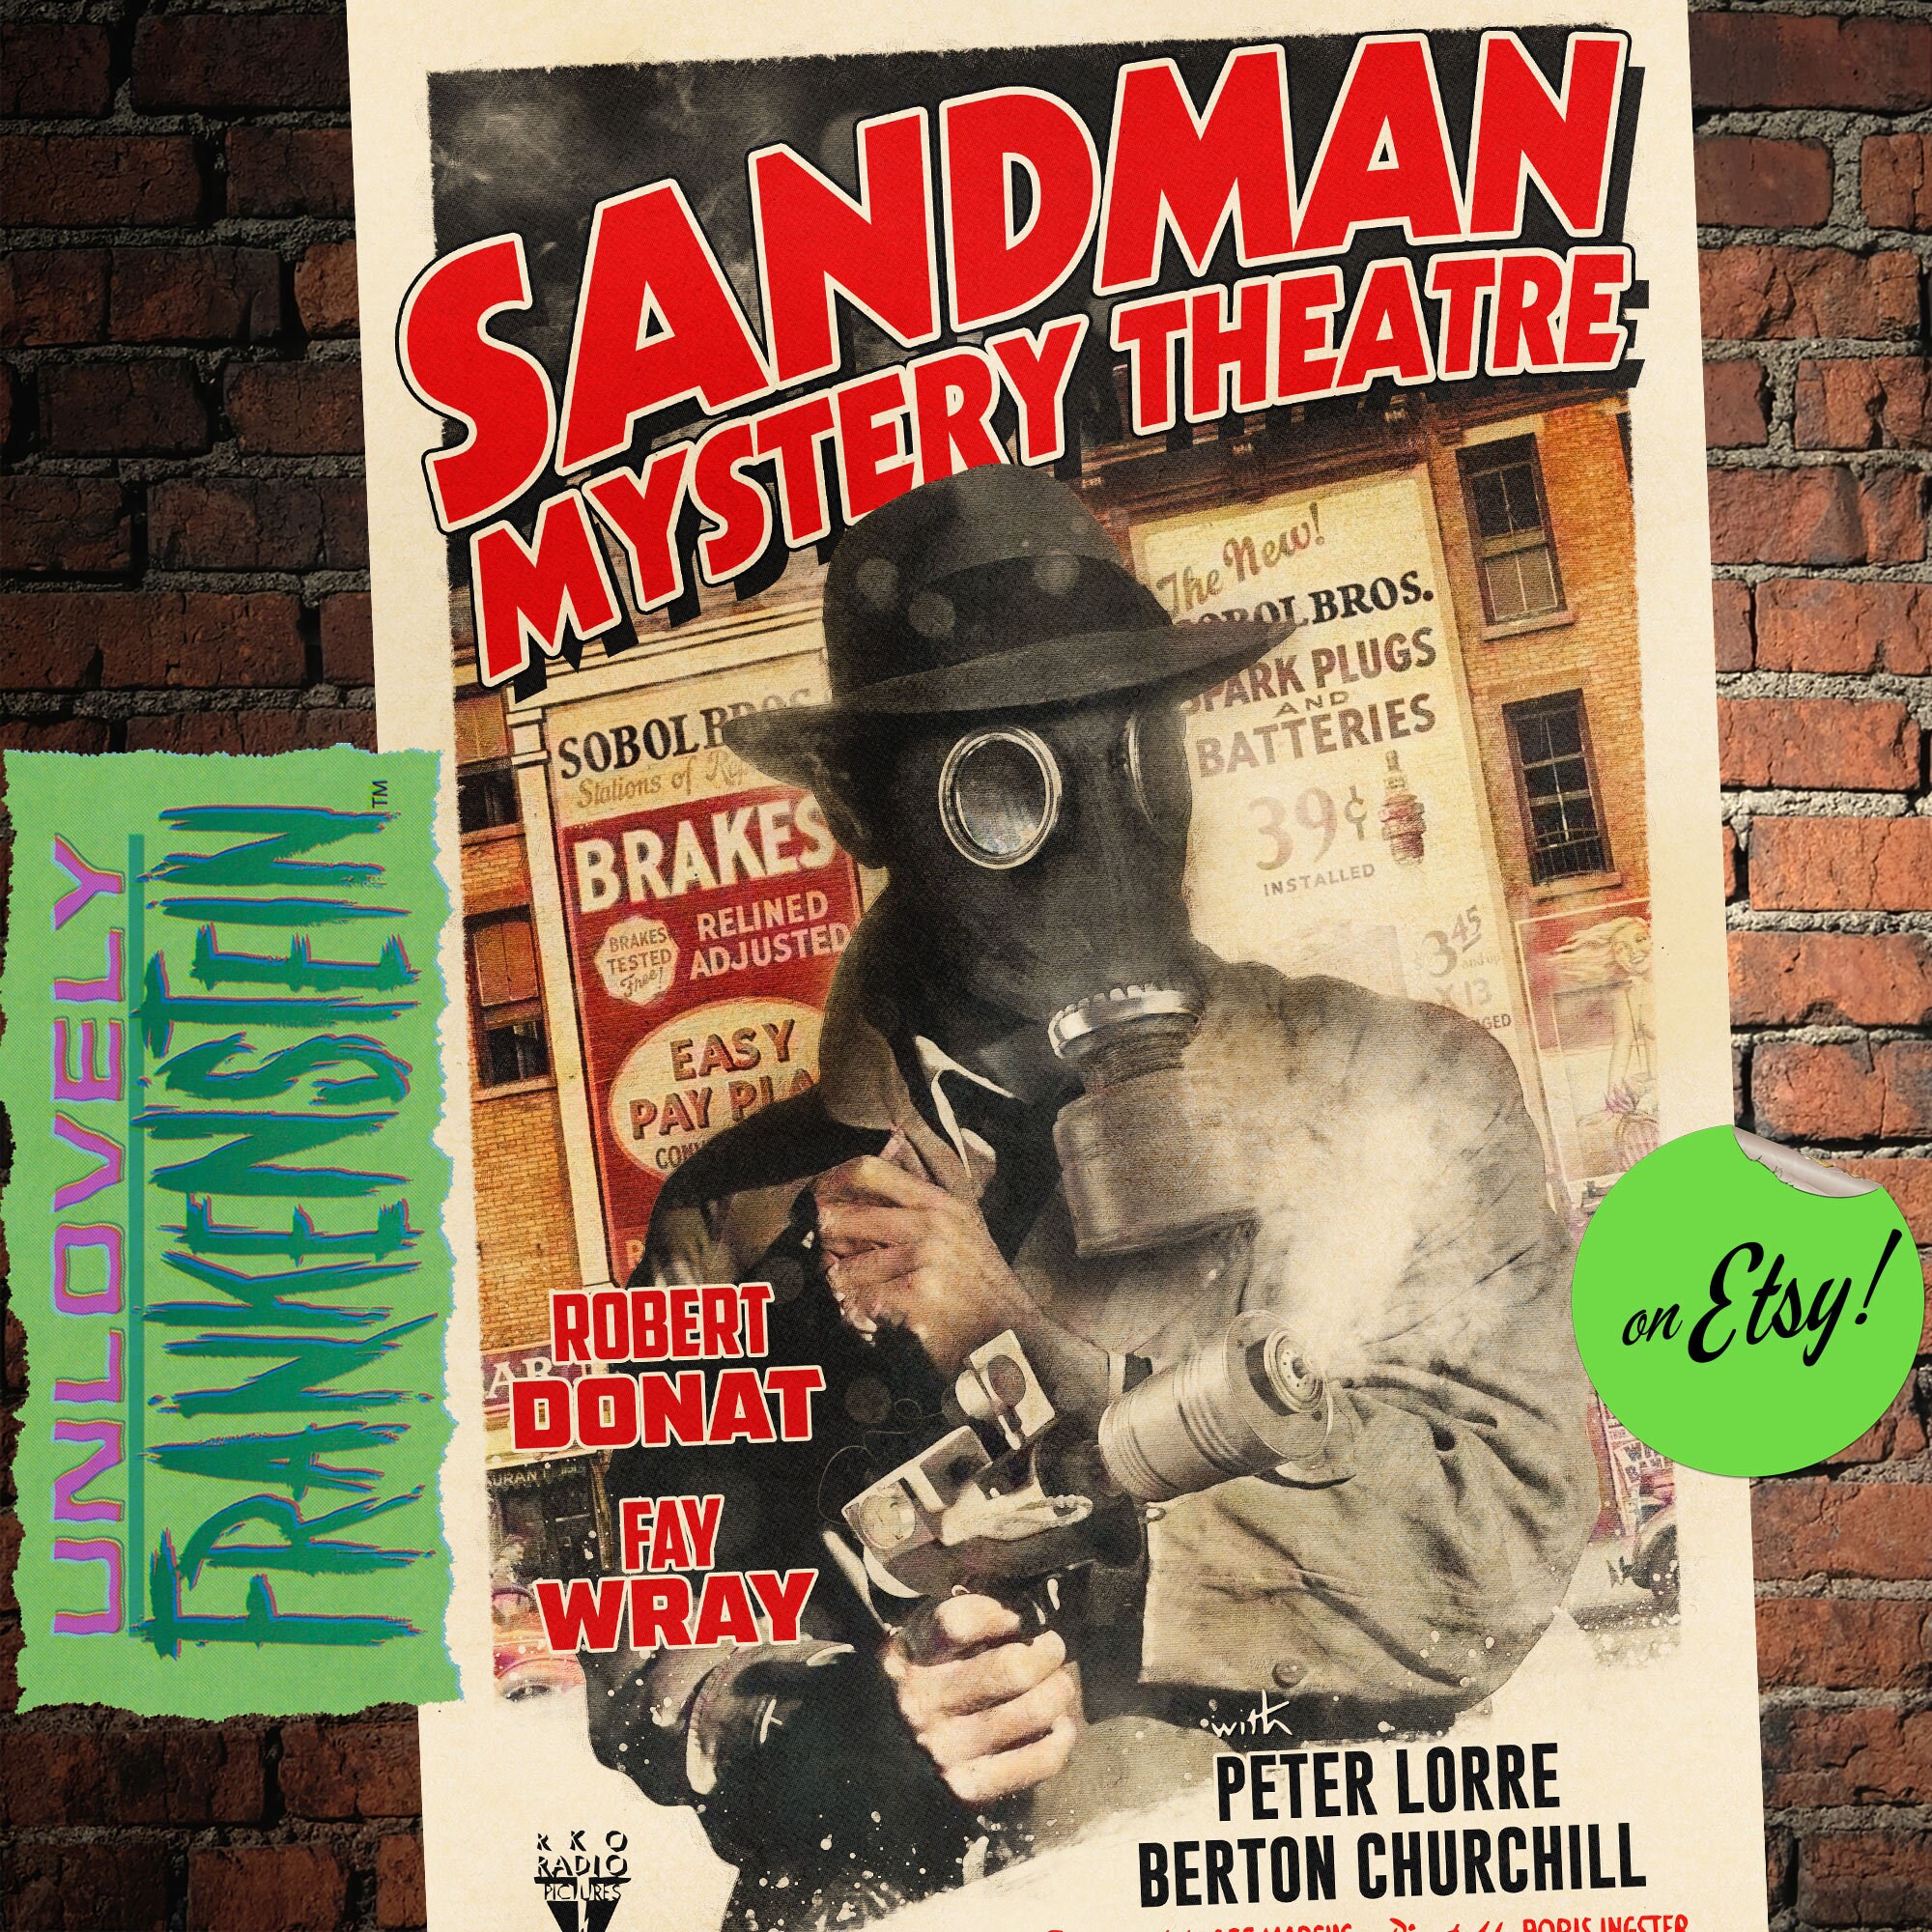 Sandman mystery theater